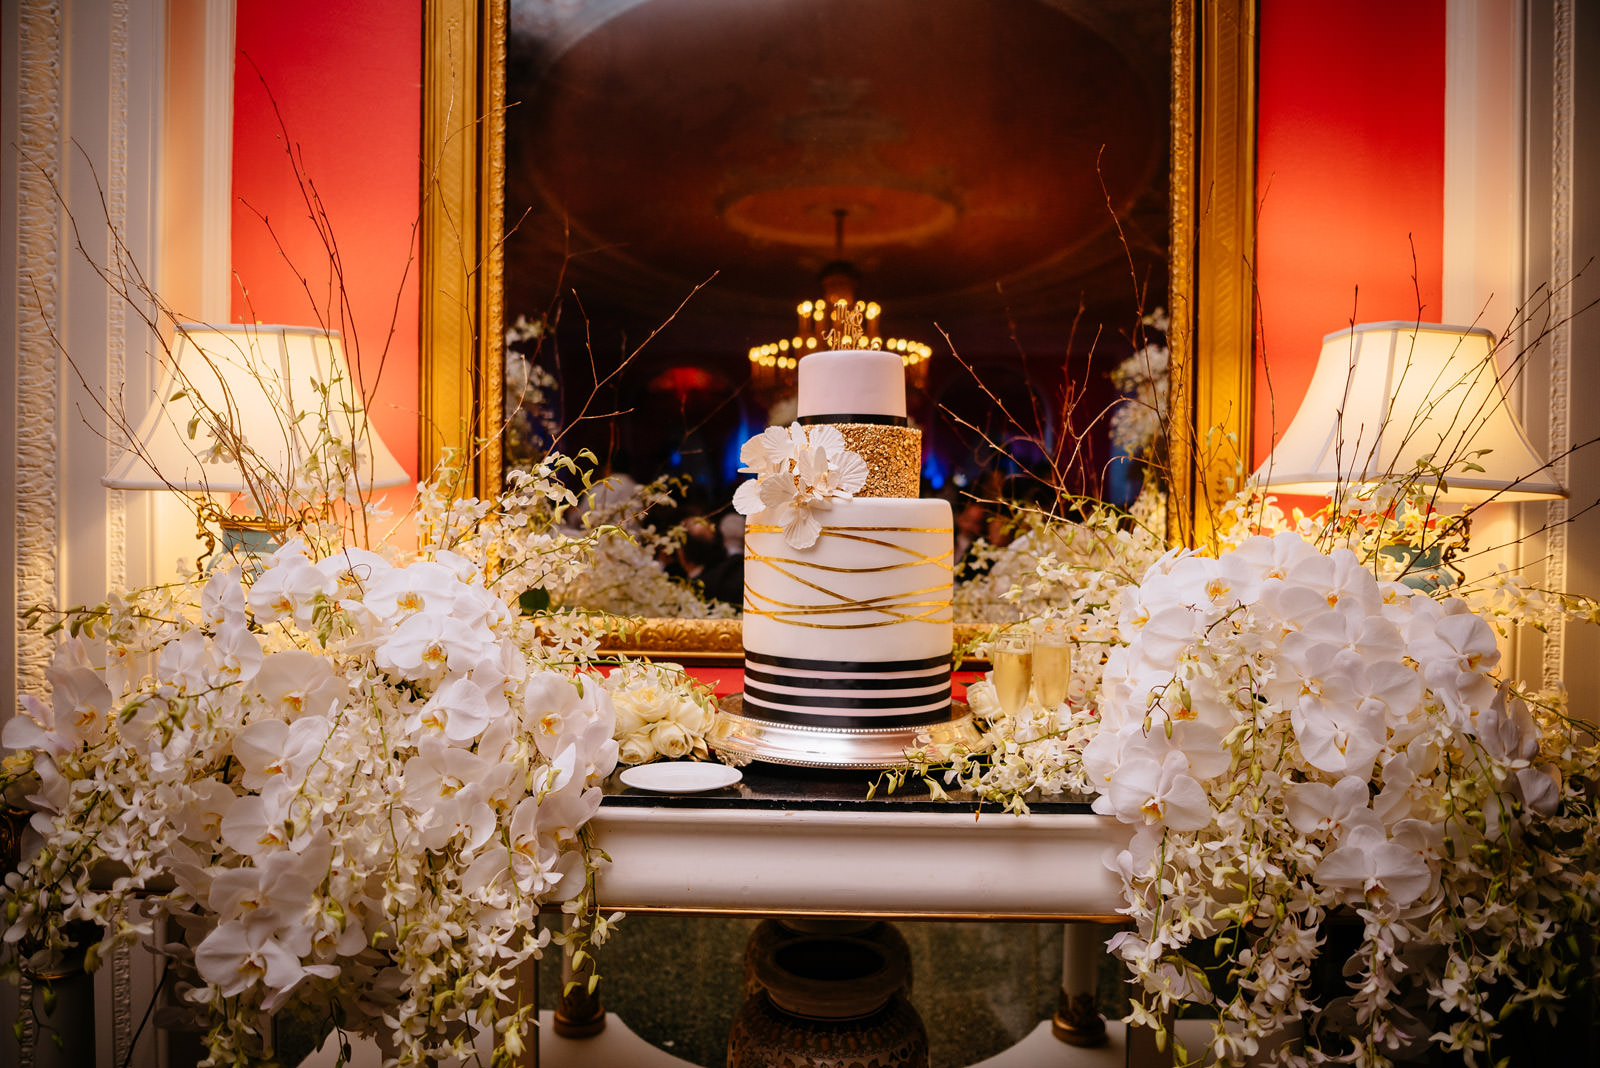 greenbrier resort wedding cake